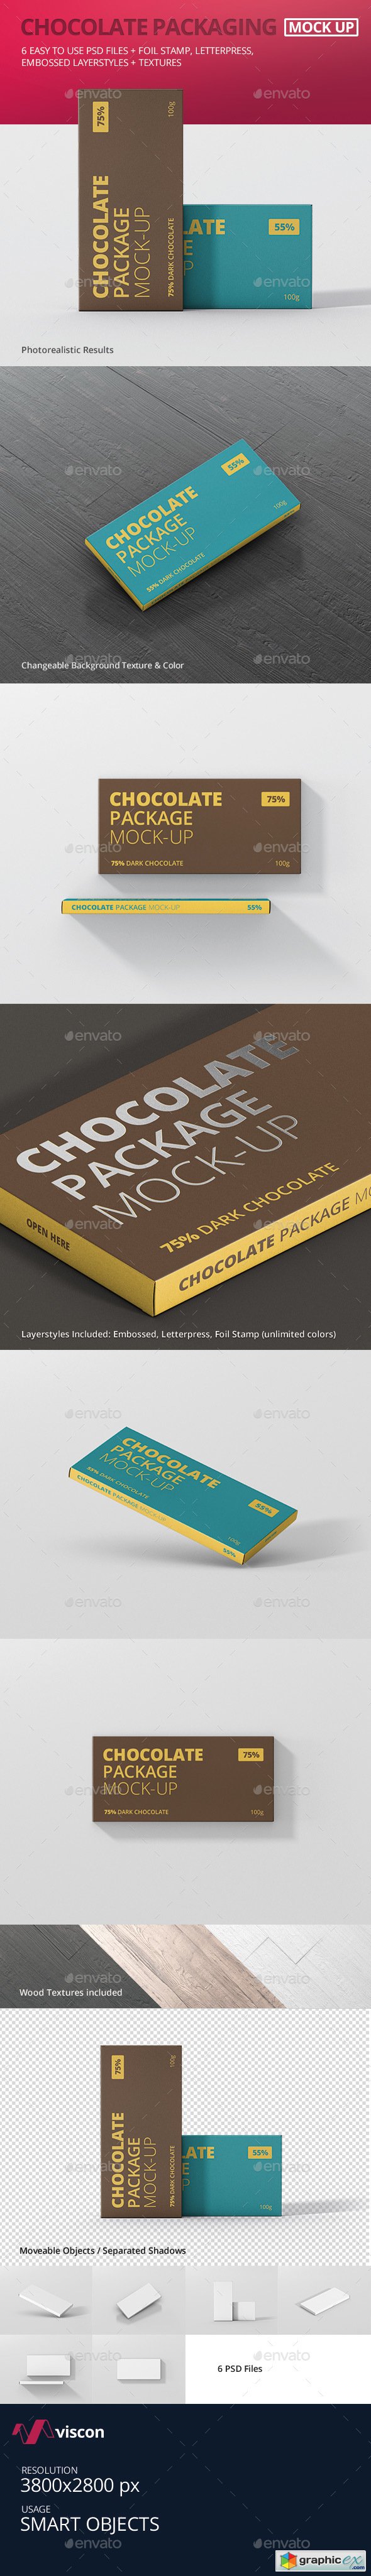 Chocolate Packaging Mock-Up